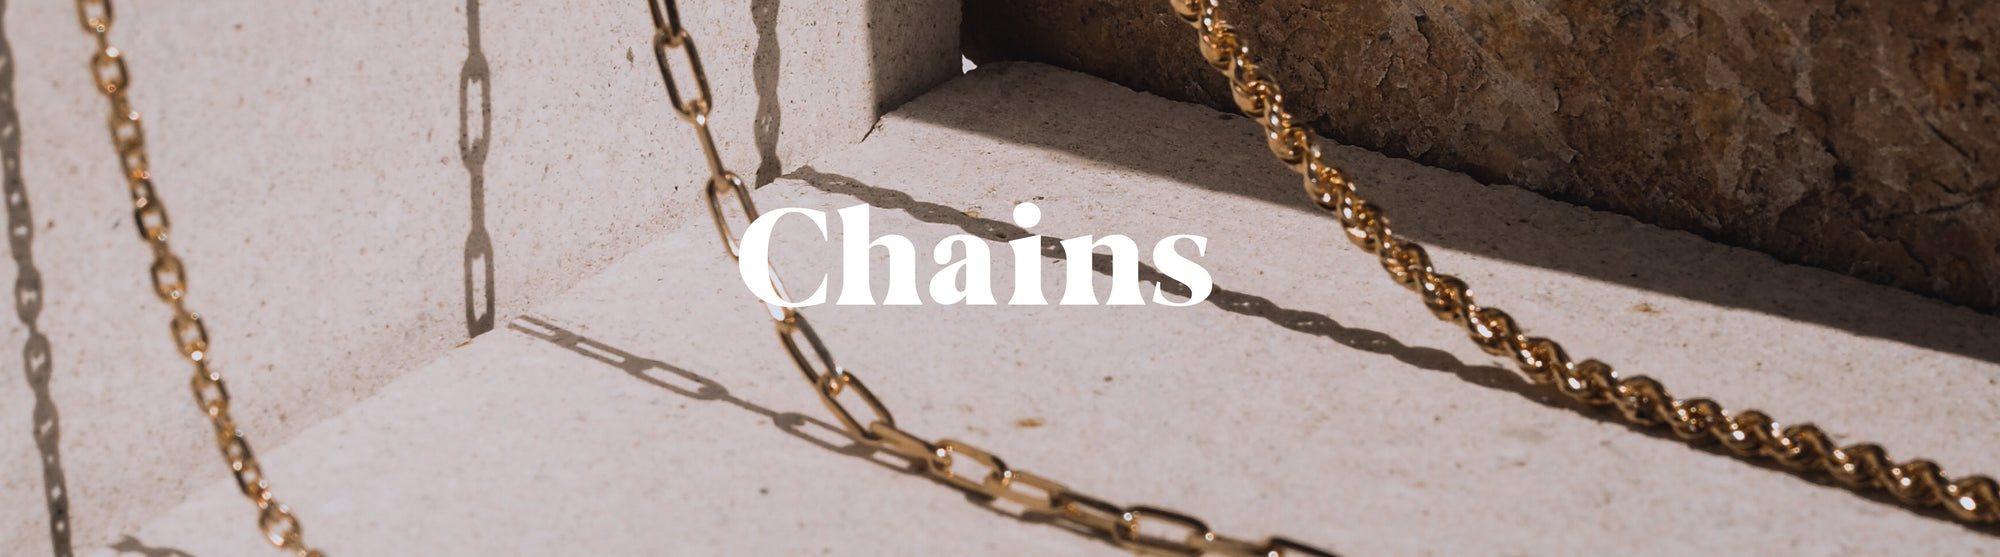 Wholesale - Chains